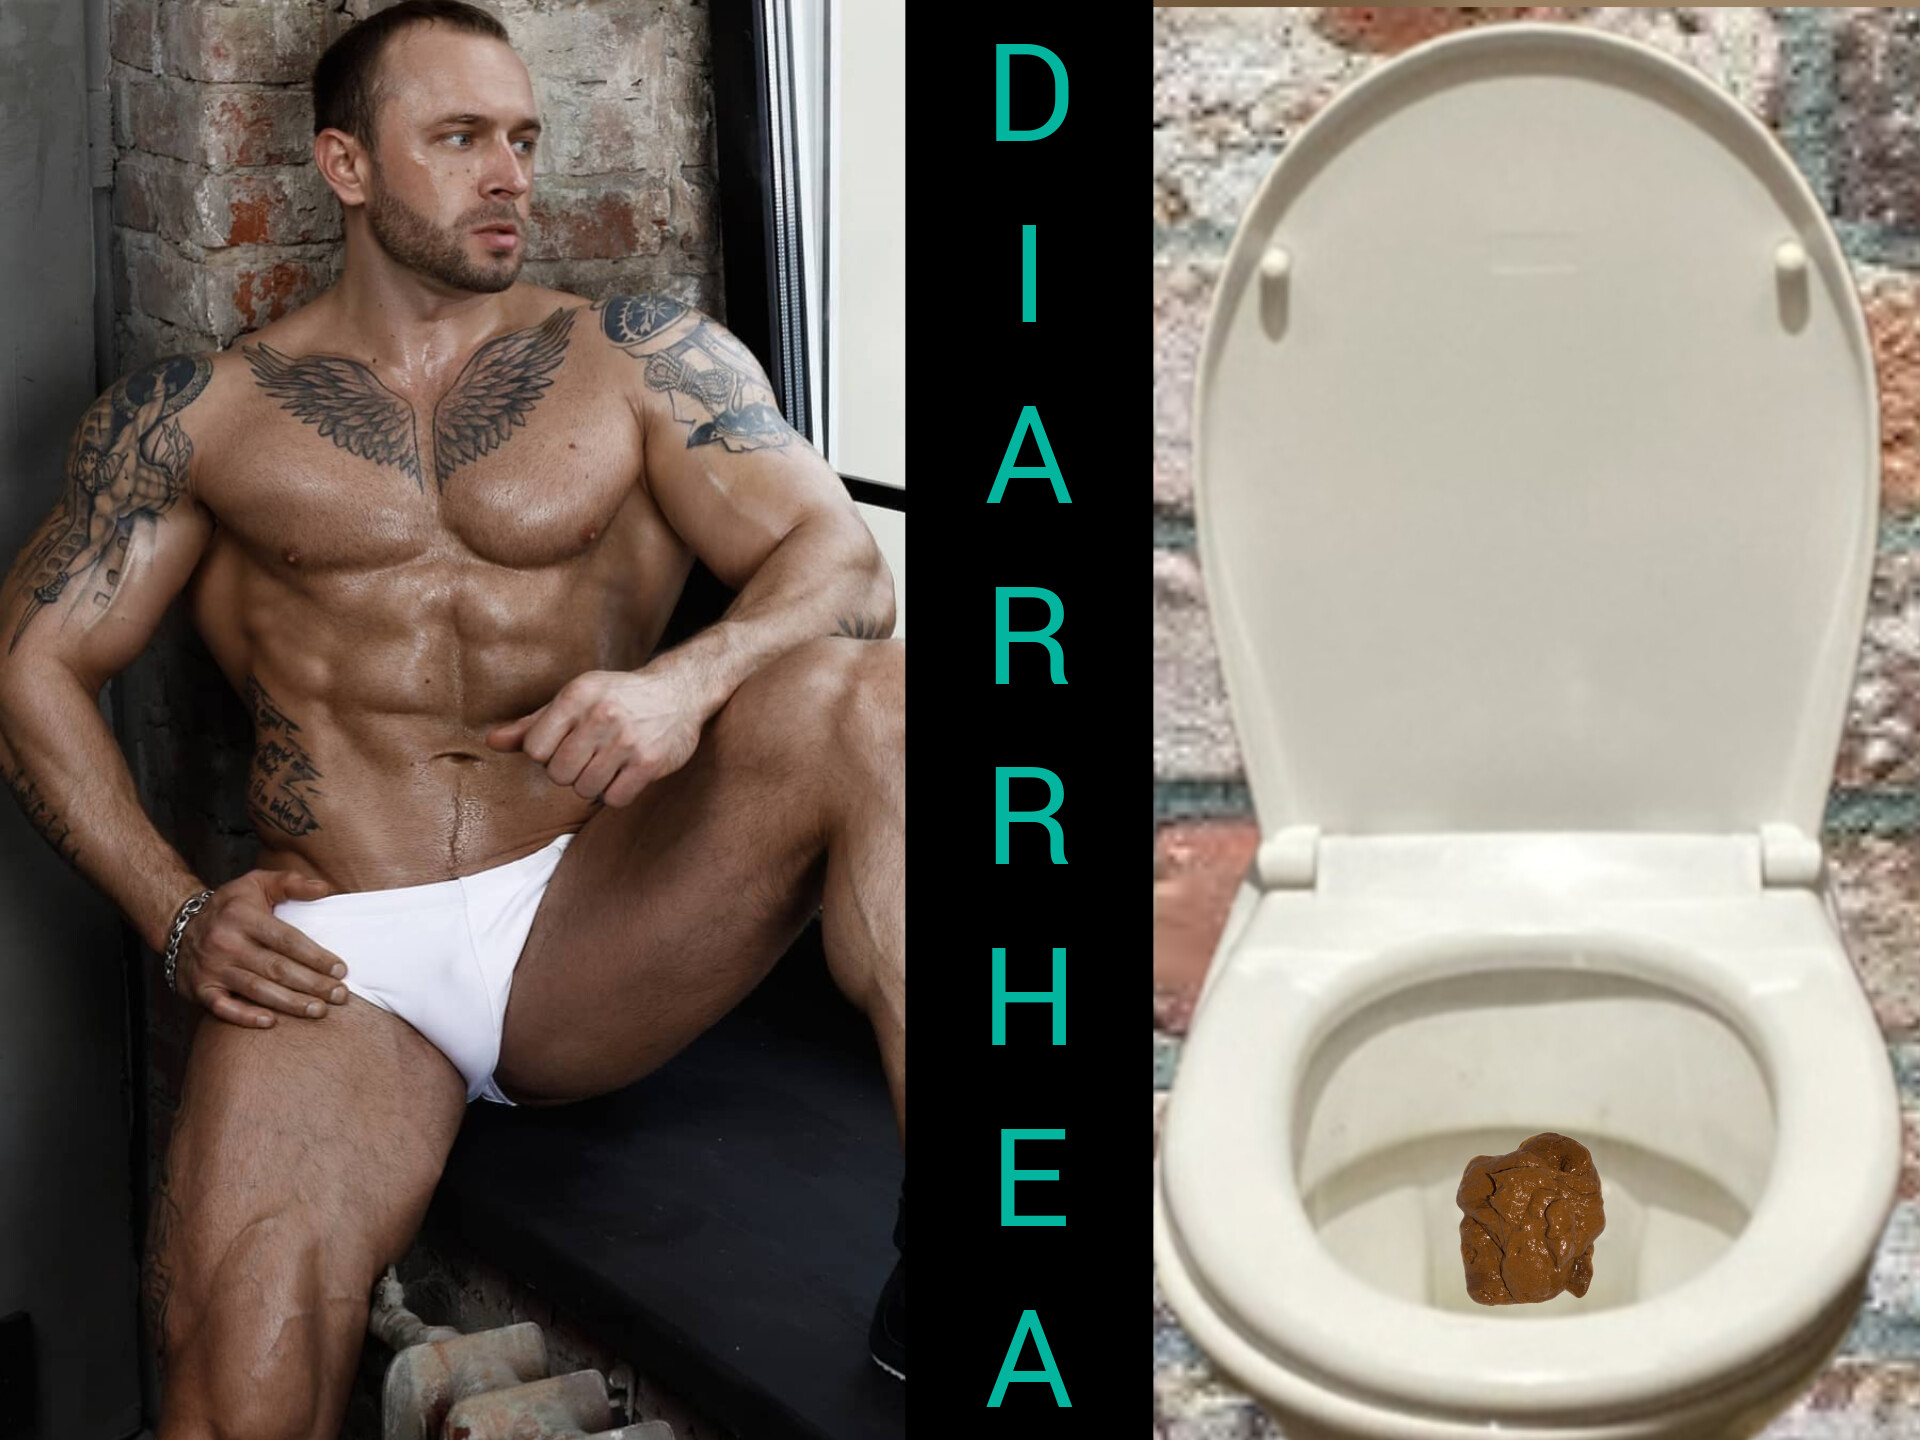 The man has serious diarrhea